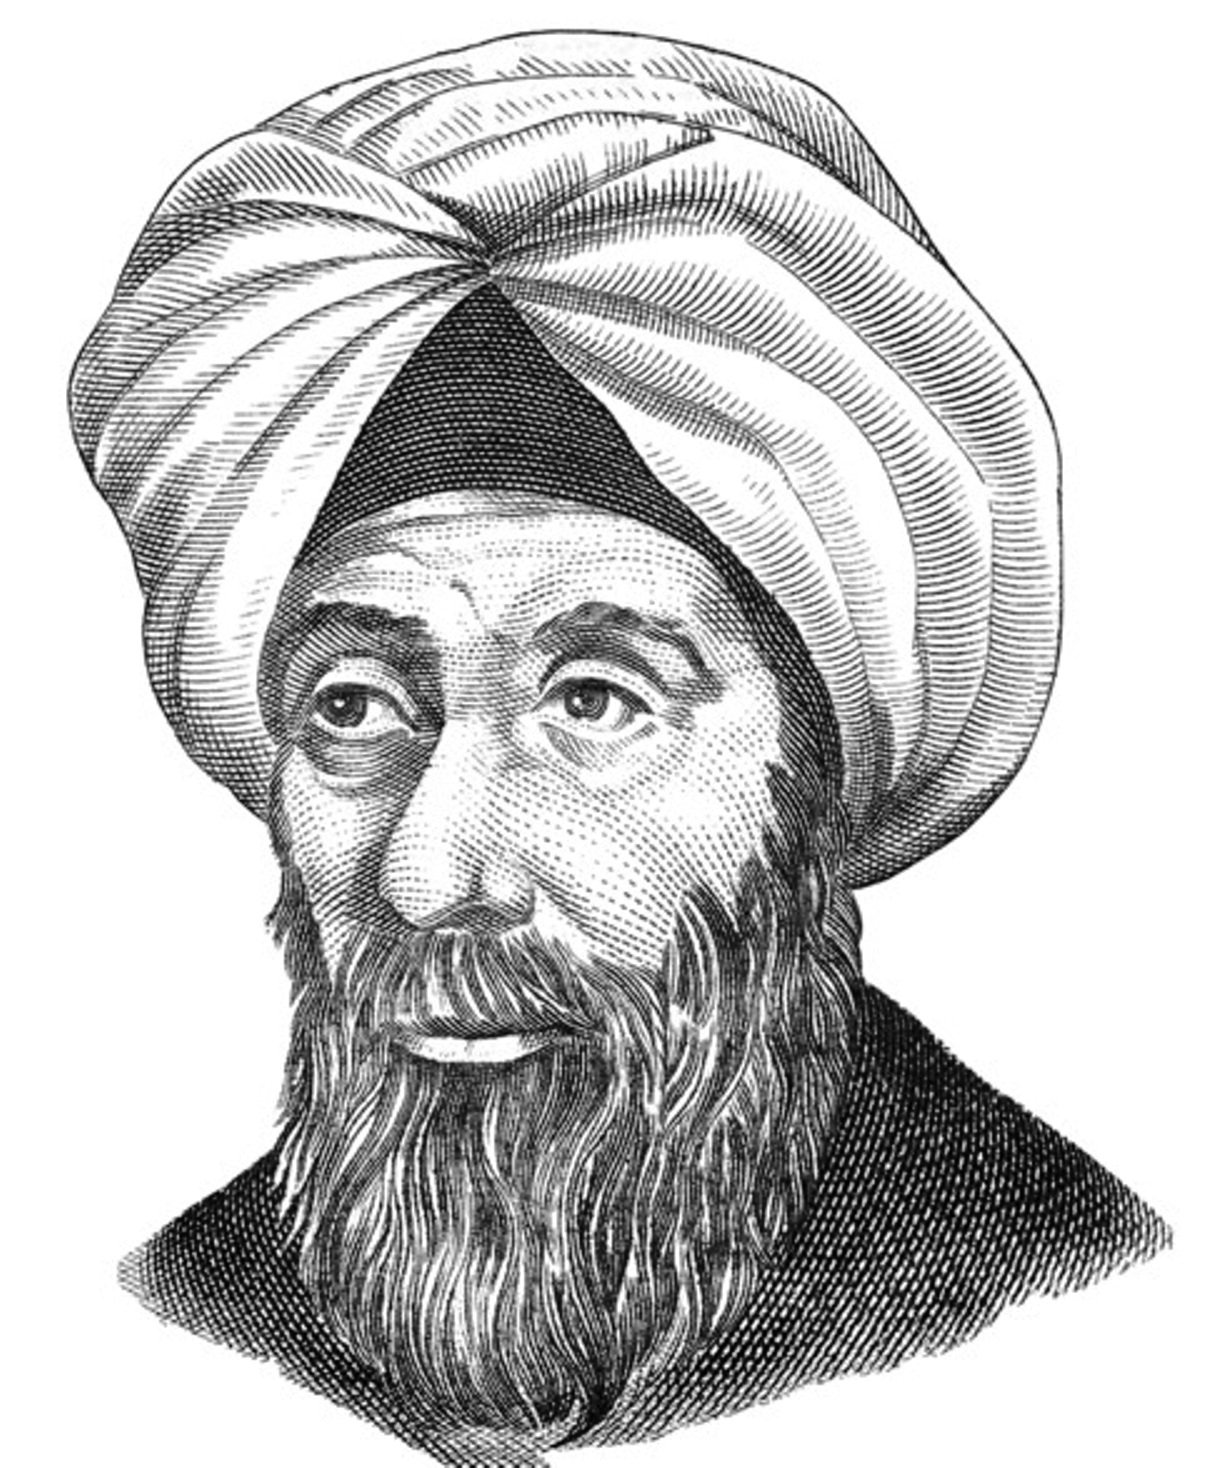 Н балхи. Ибн Аль-Хайсам. Ибн ал-Хайсам (Альгазен) (965-1039). Арабский ученый ибн Аль-Хайсам. Ибн Аль-Хайтама (Альхазена).